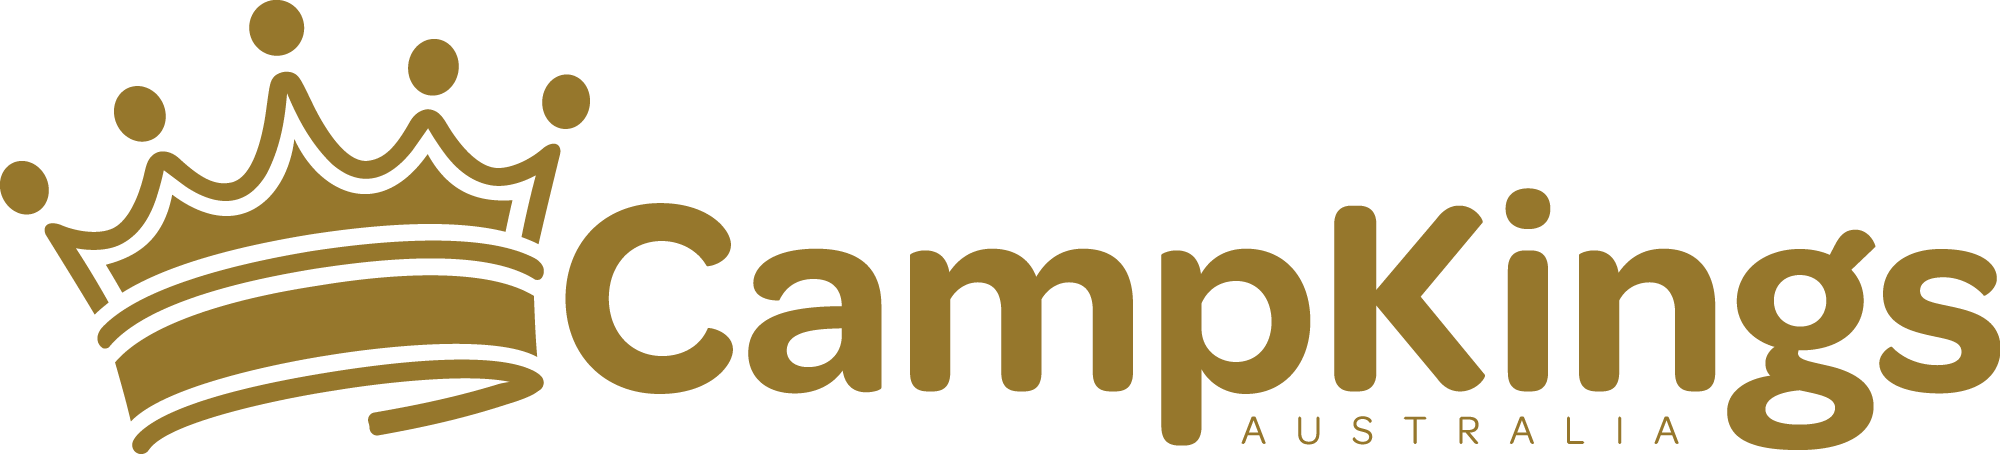 campkings-logo-gold.png